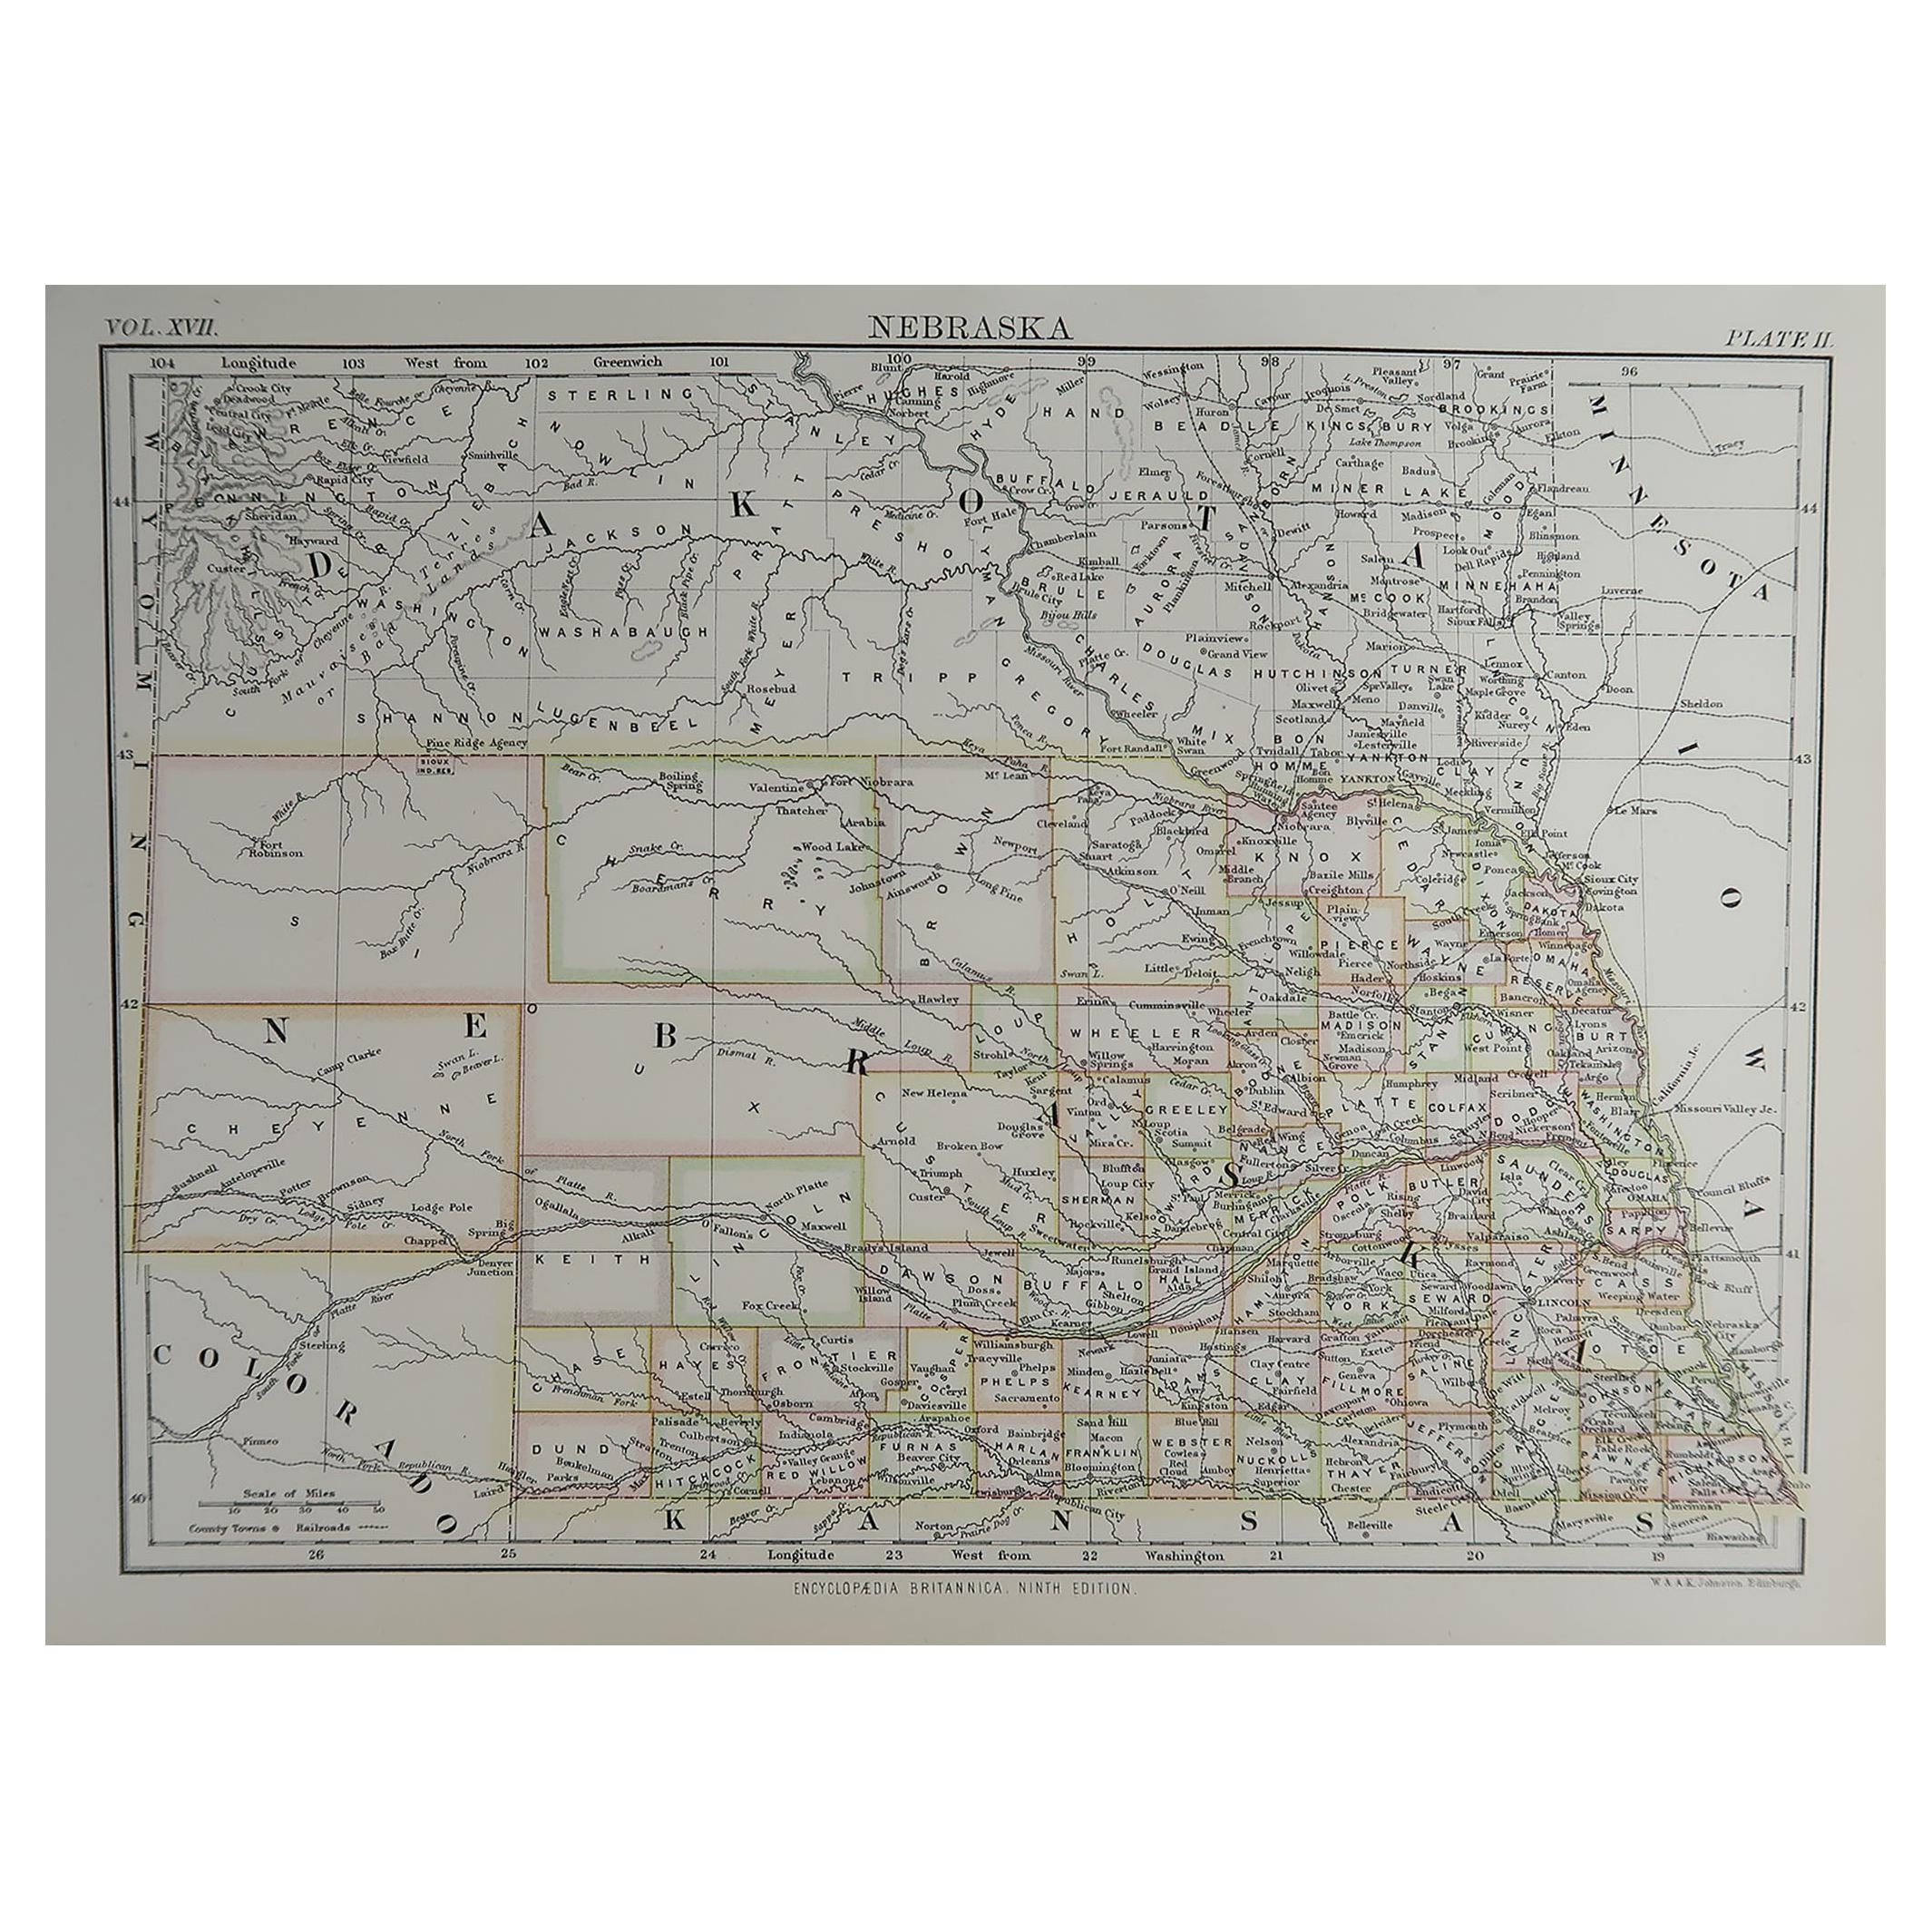 Original Antique Map of The American State of Nebraska, 1889